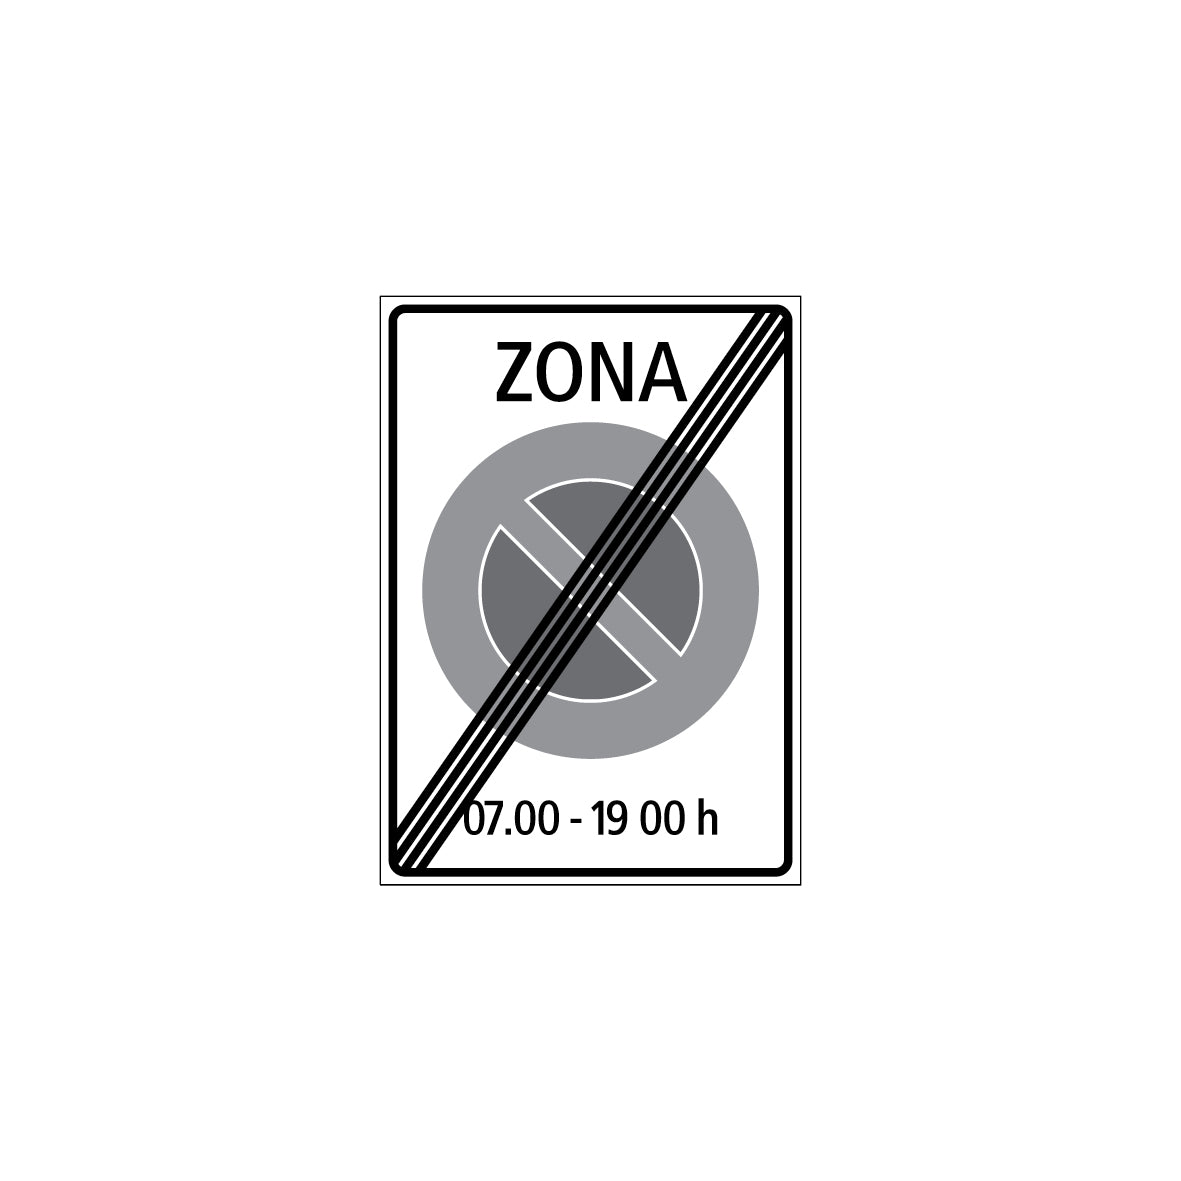 Zonensignal, Ende der Zone, 2.59.2e